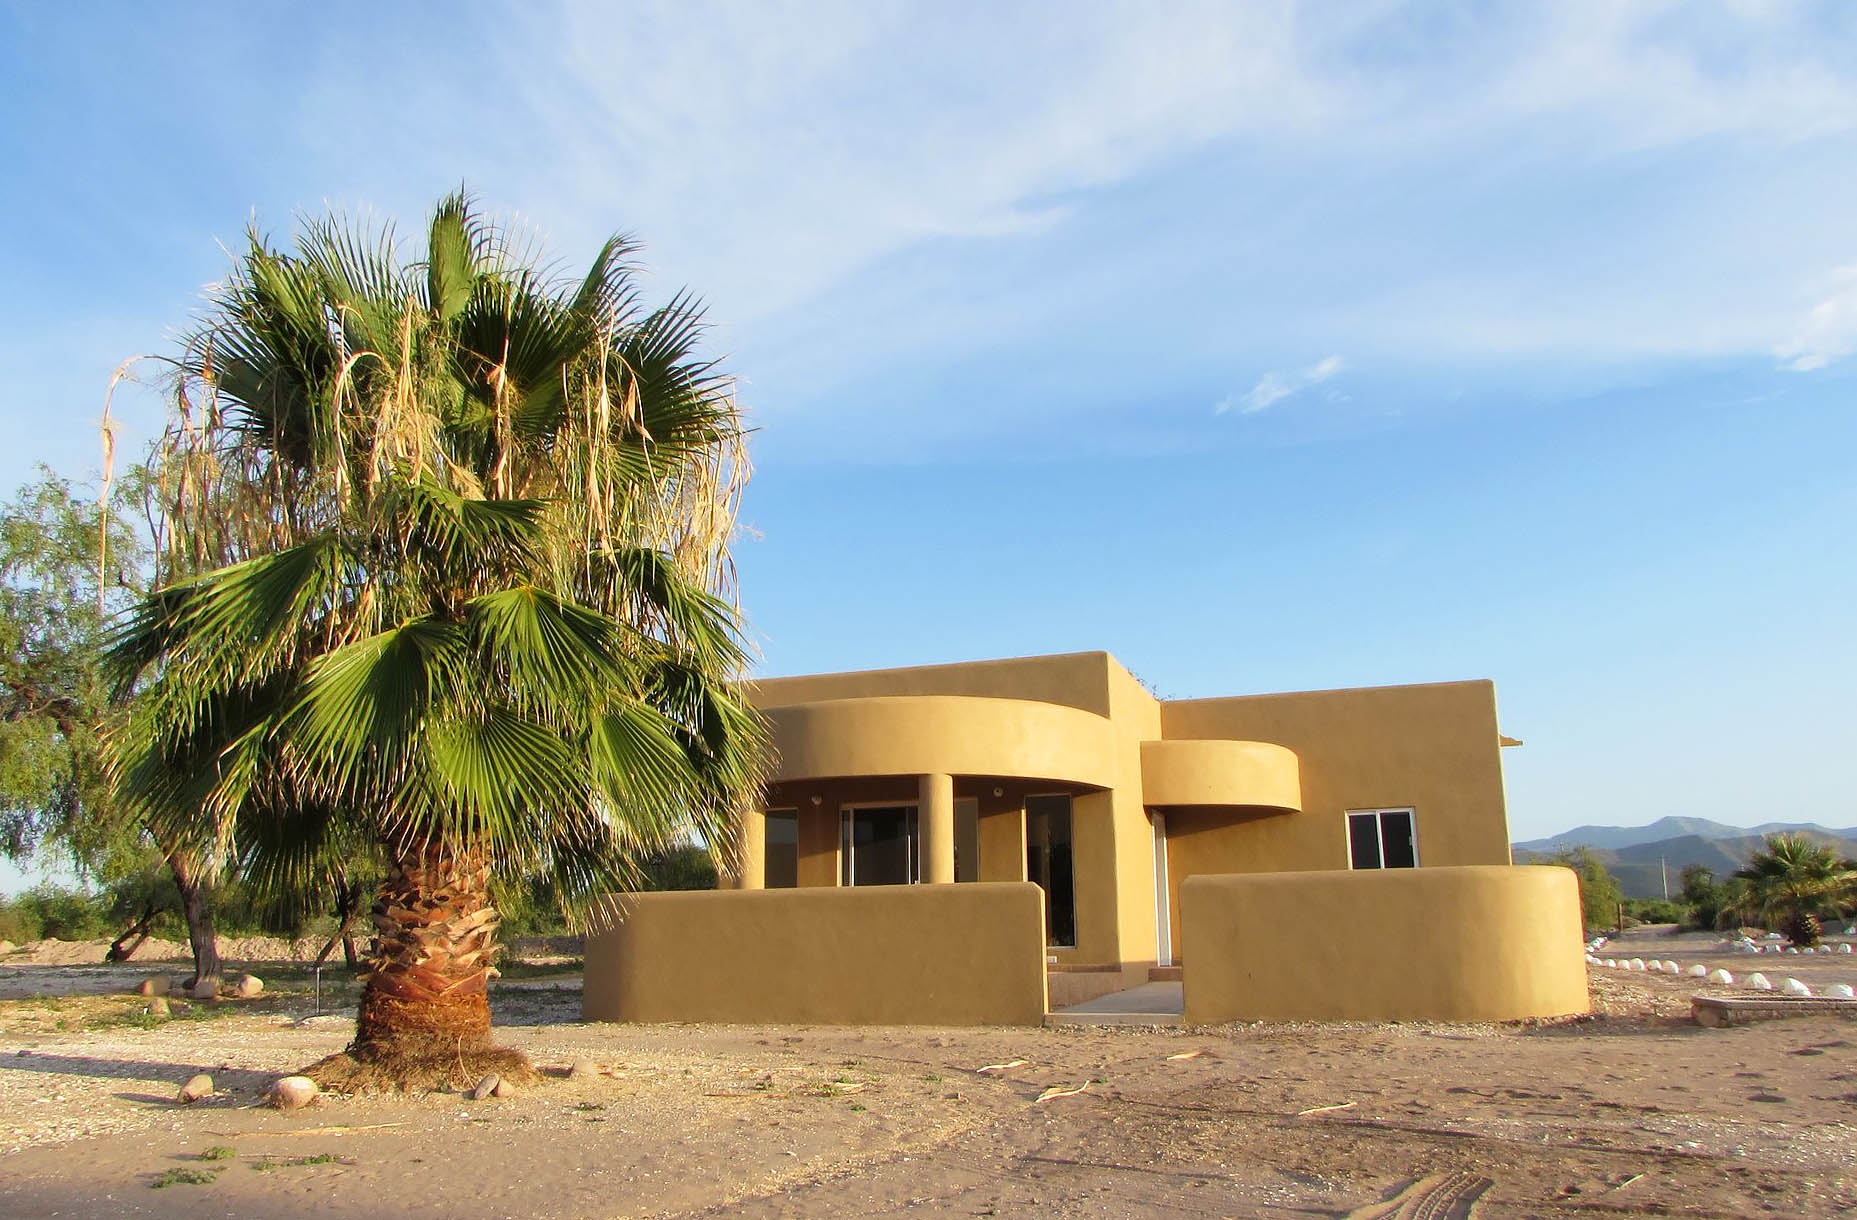 Dorado Beach Home for Sale in Santa Rosalia near Loreto Baja Review